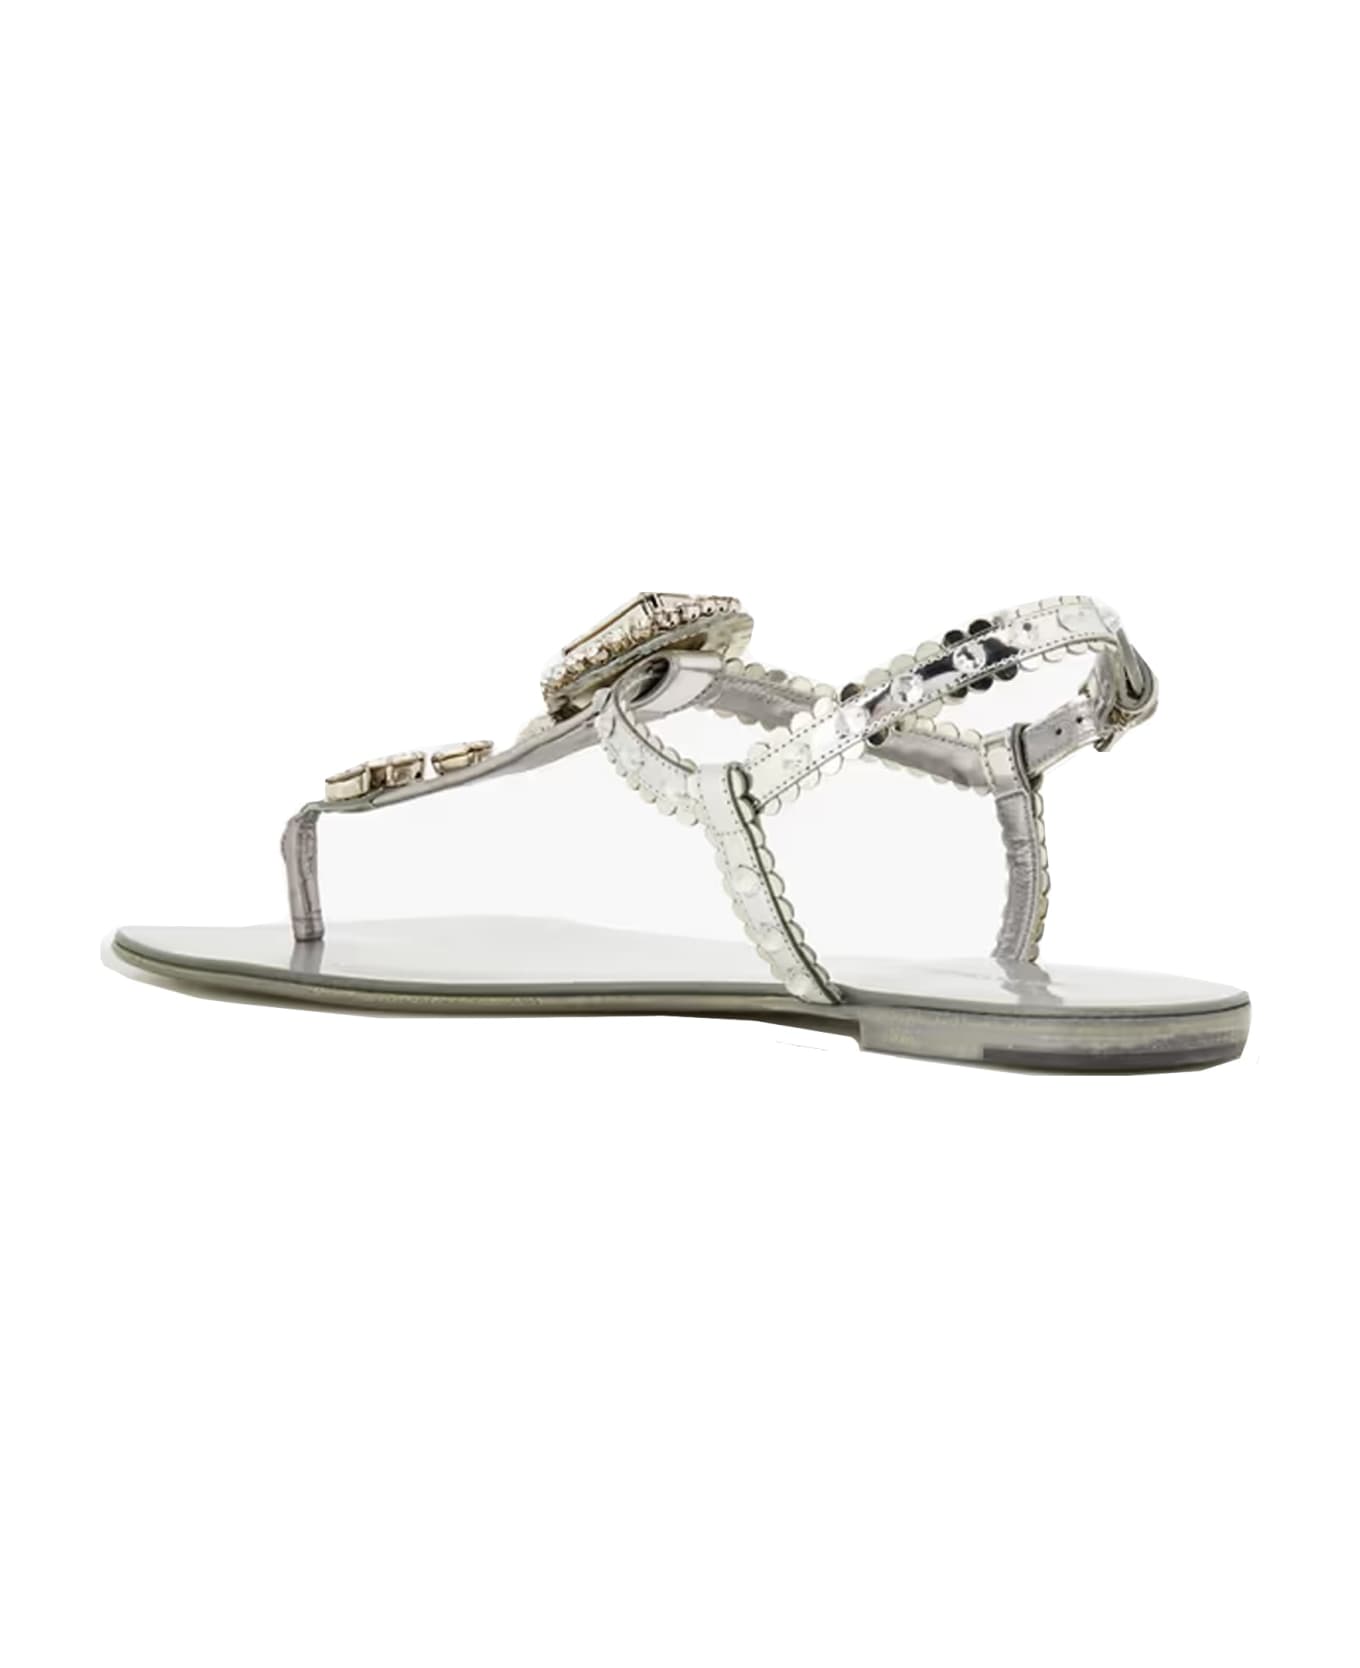 Dolce & Gabbana Crystal Leather Sandals - Silver サンダル